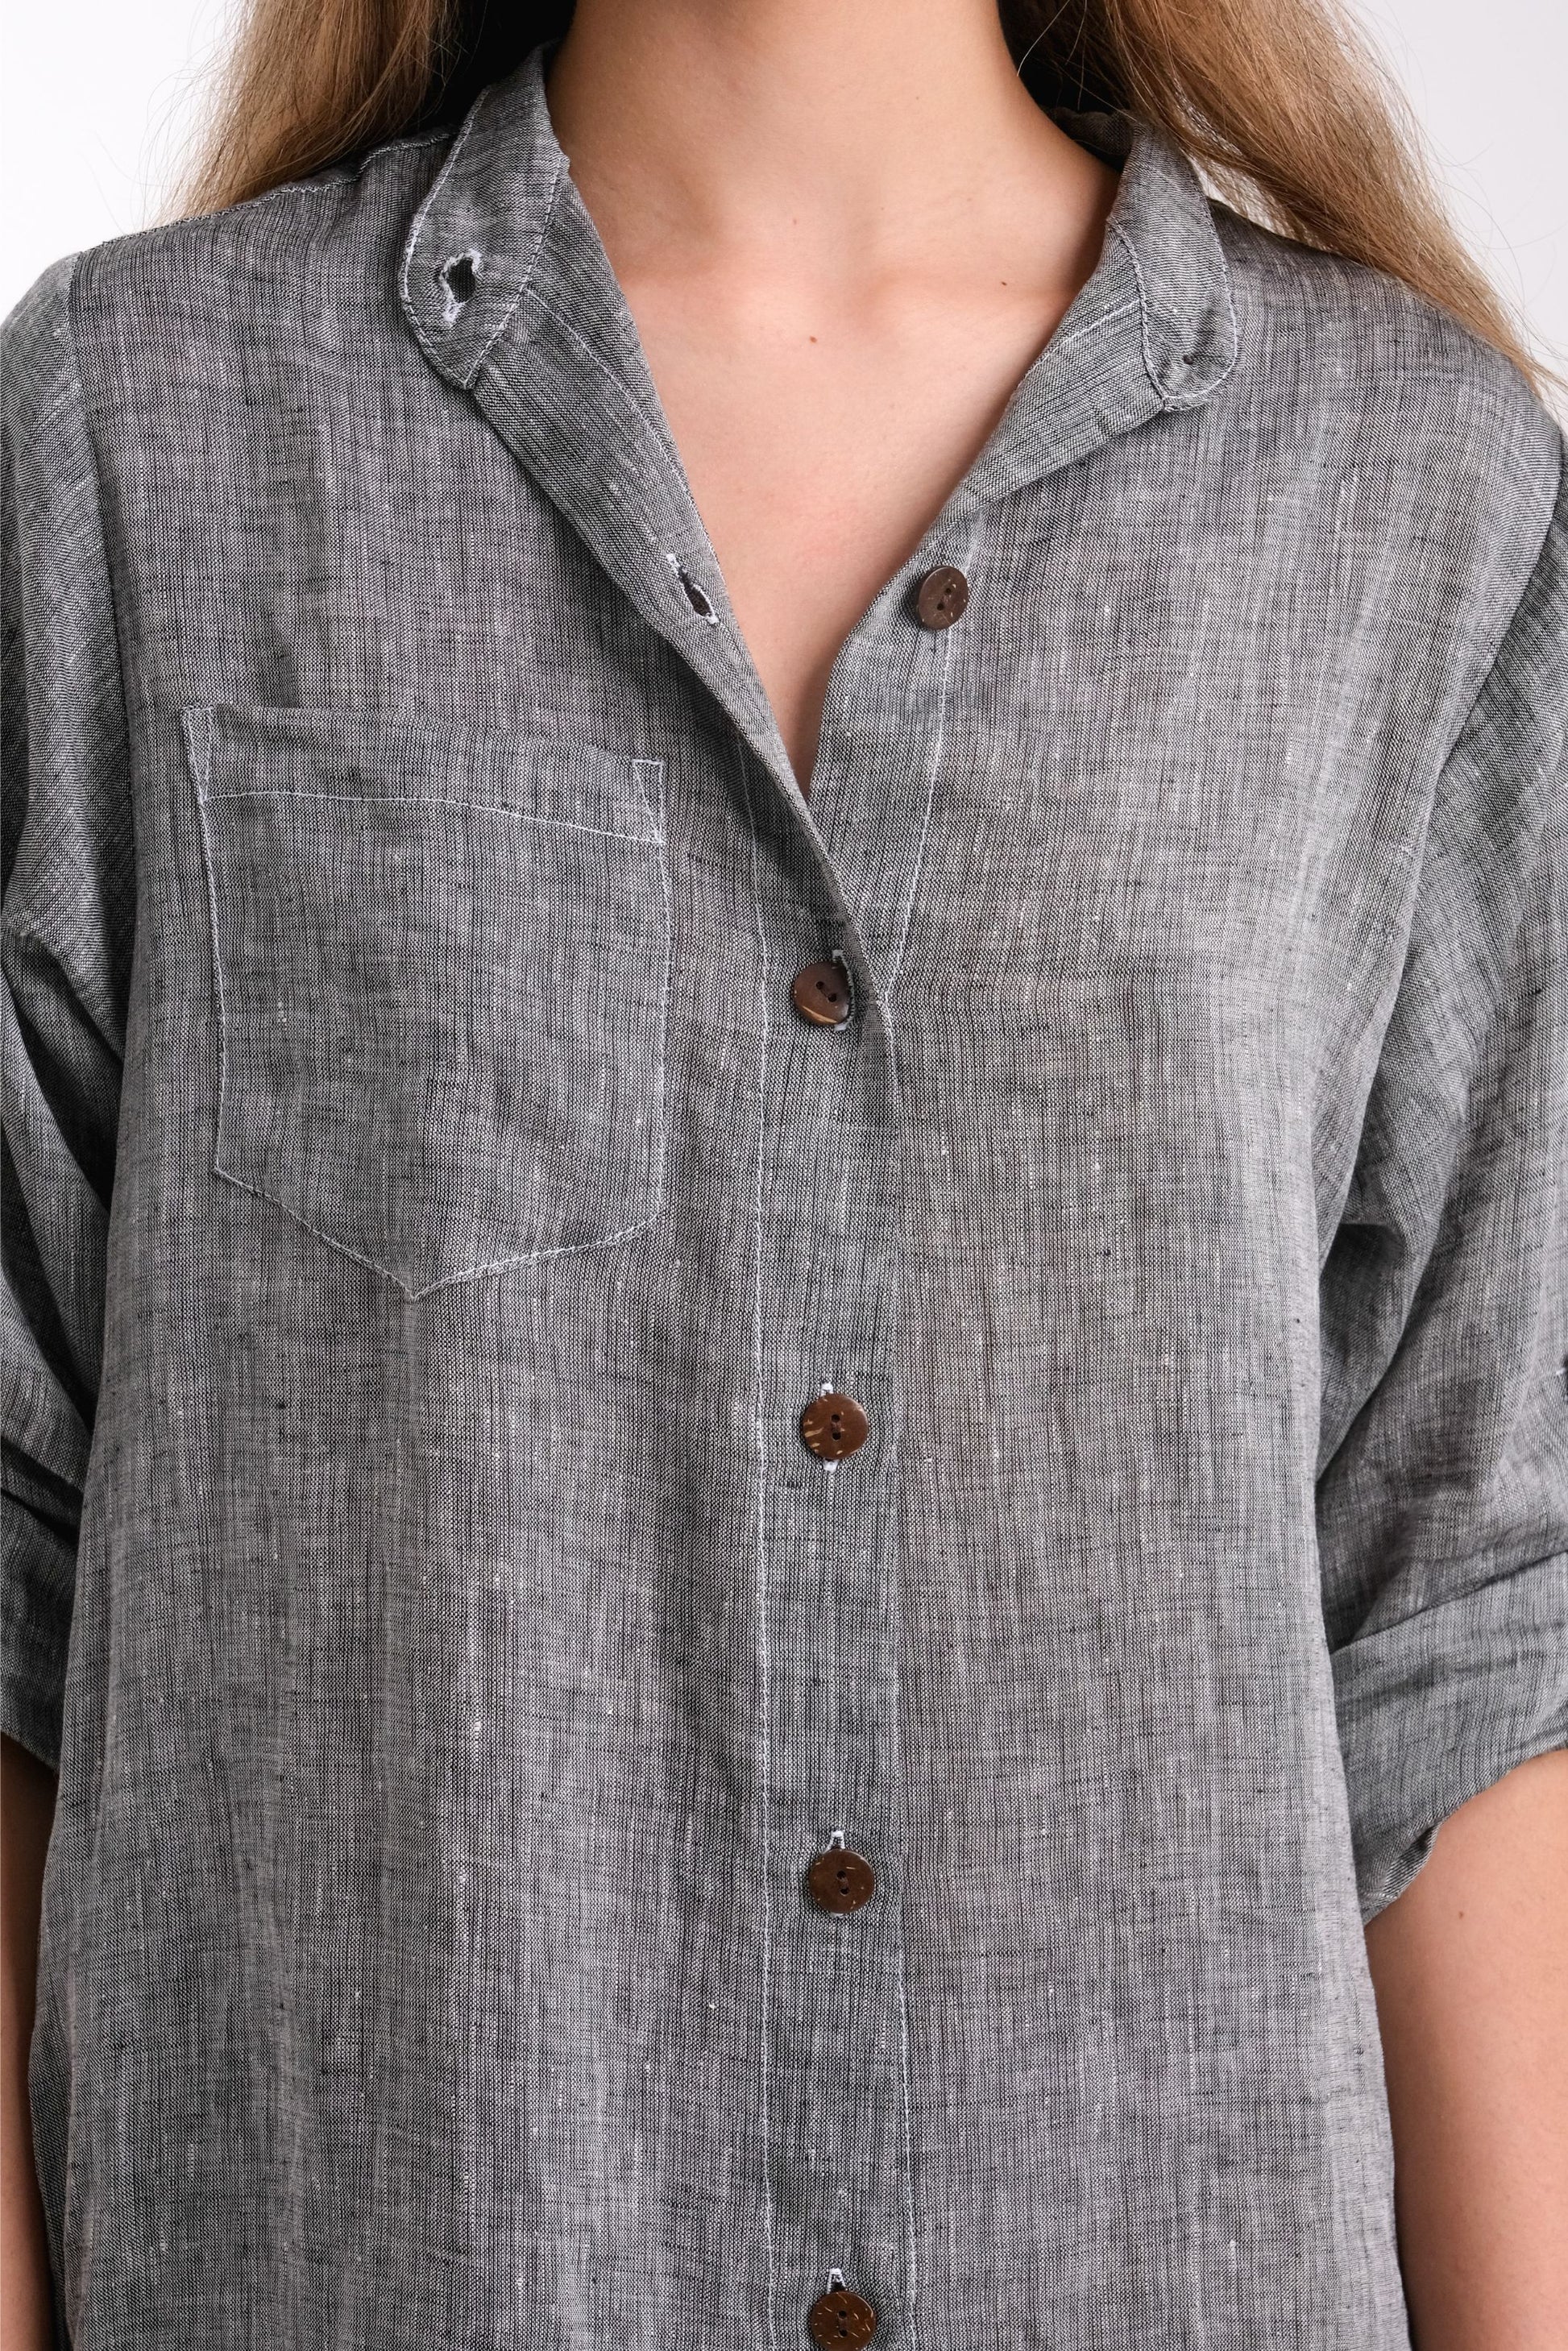 Womens long sleeved grey shirt dress close up